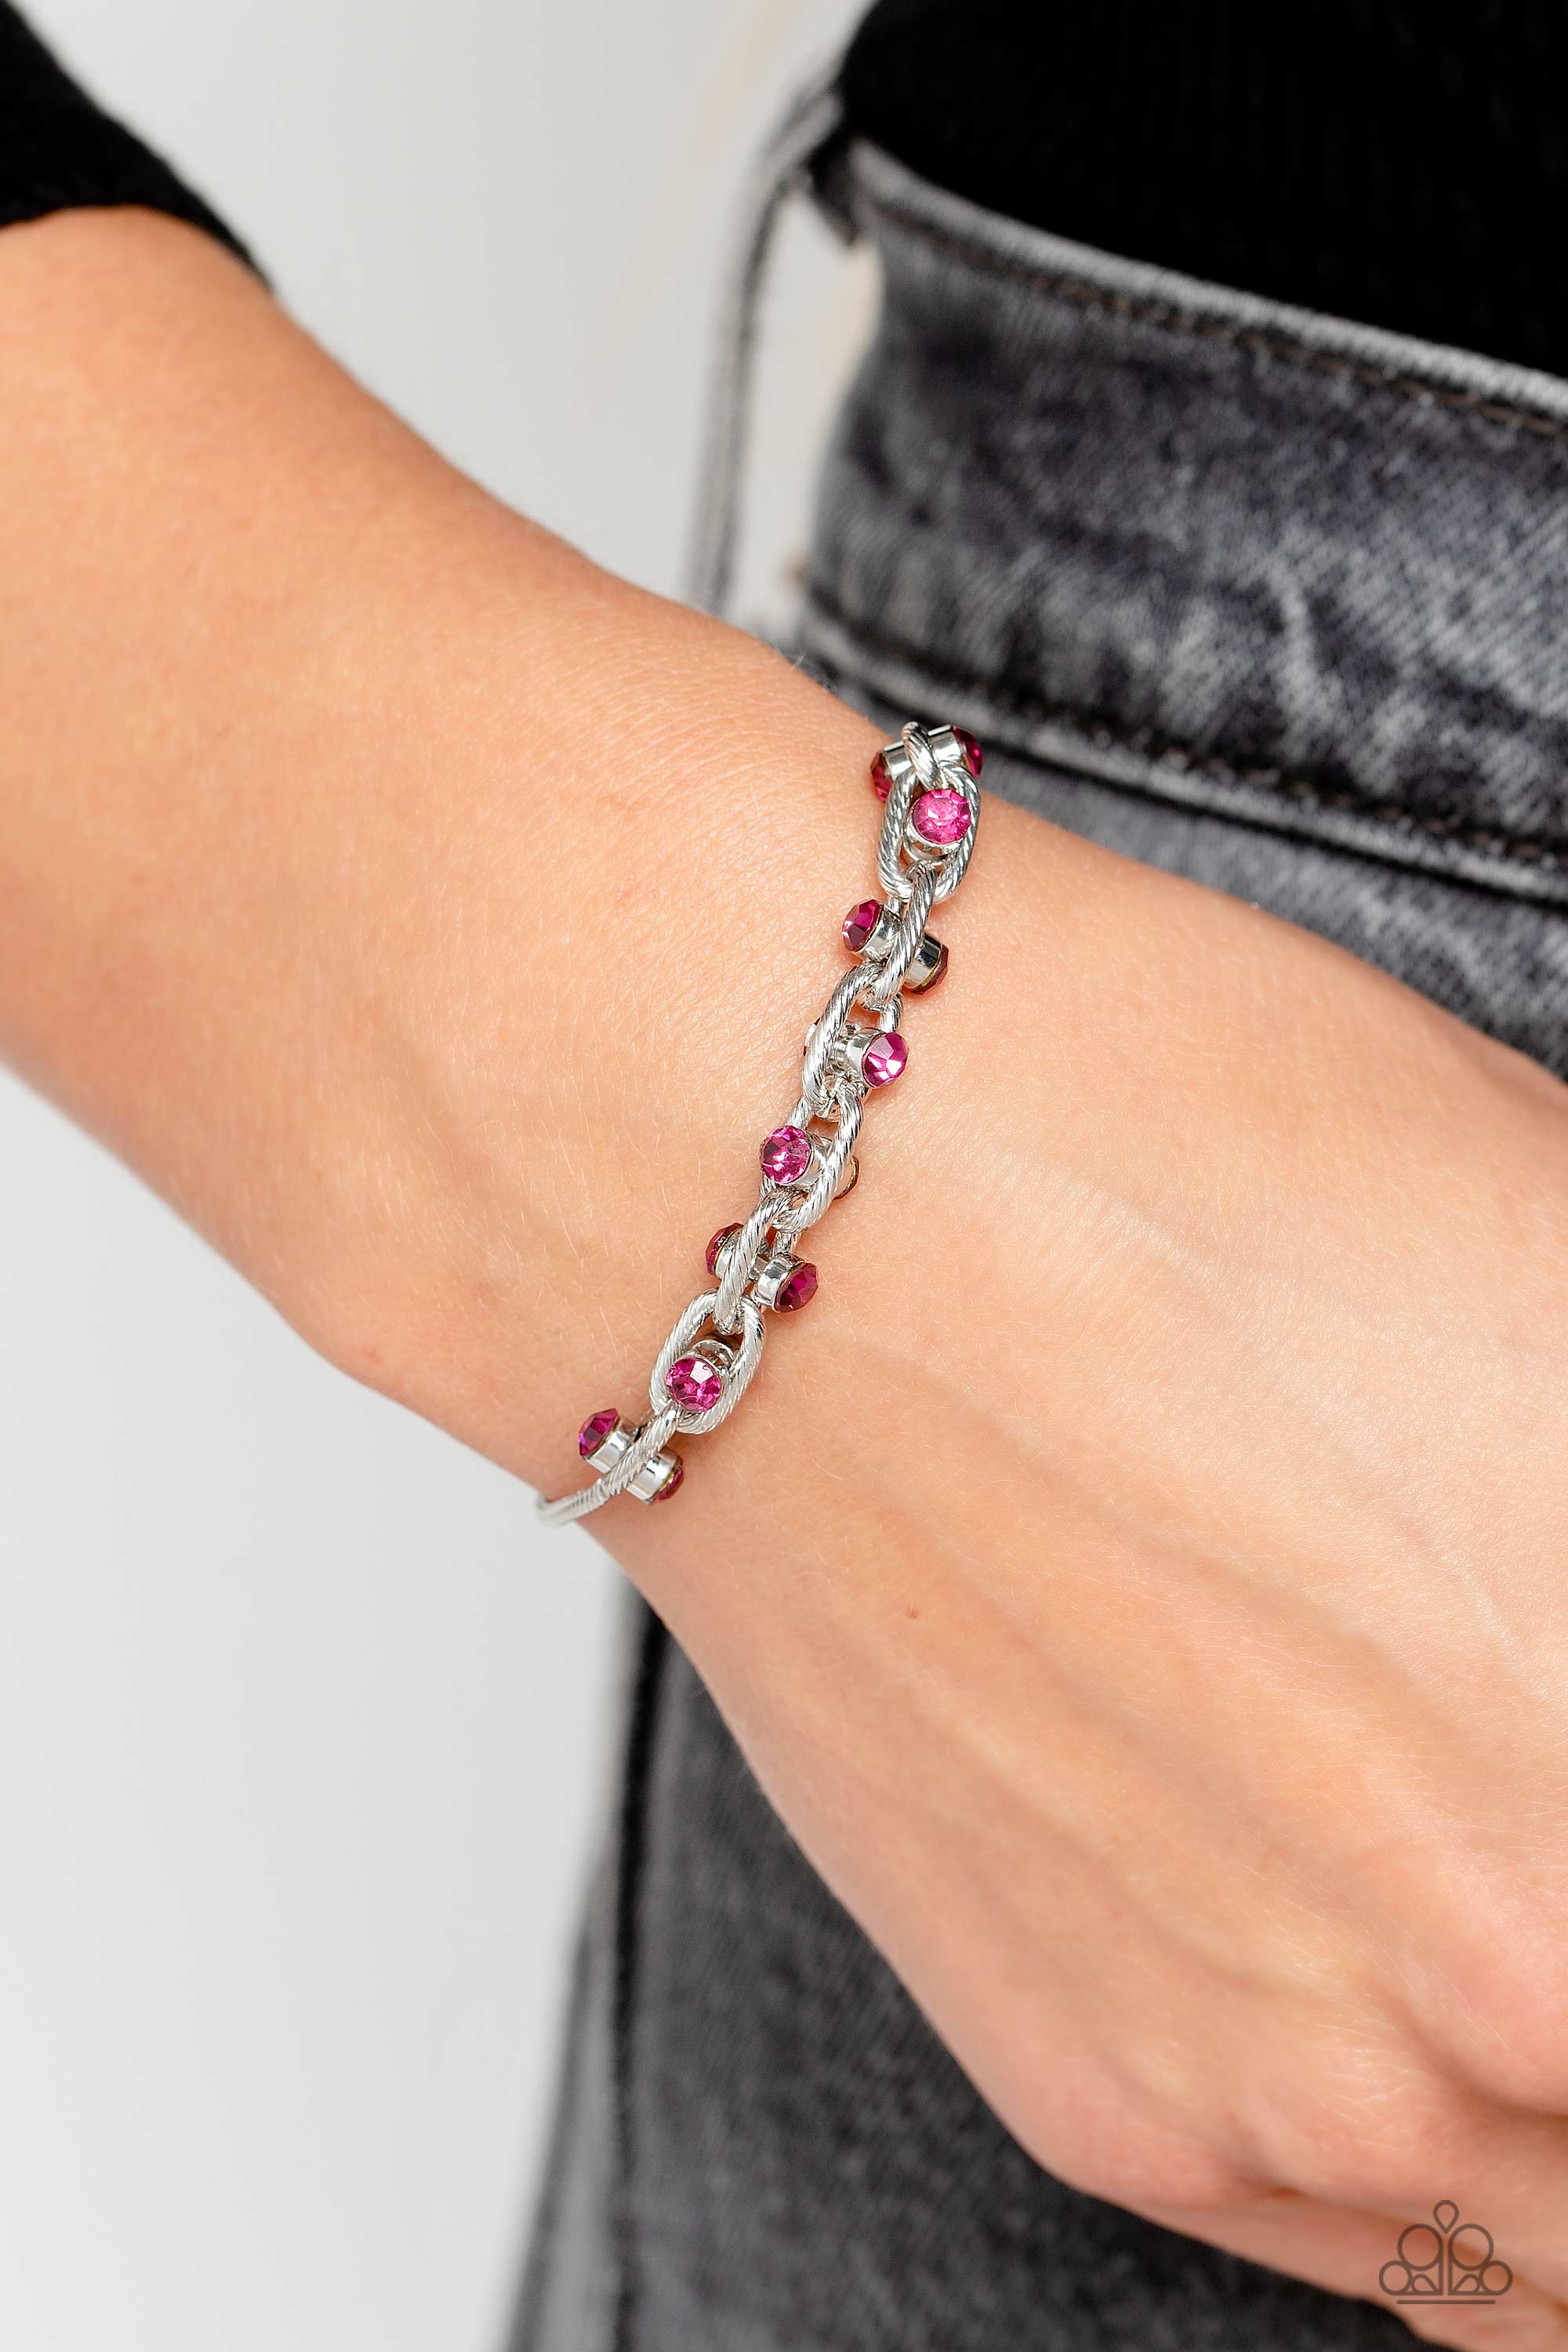 Intertwined Illusion Pink Rhinestone Slide Bracelet - Paparazzi Accessories- lightbox - CarasShop.com - $5 Jewelry by Cara Jewels